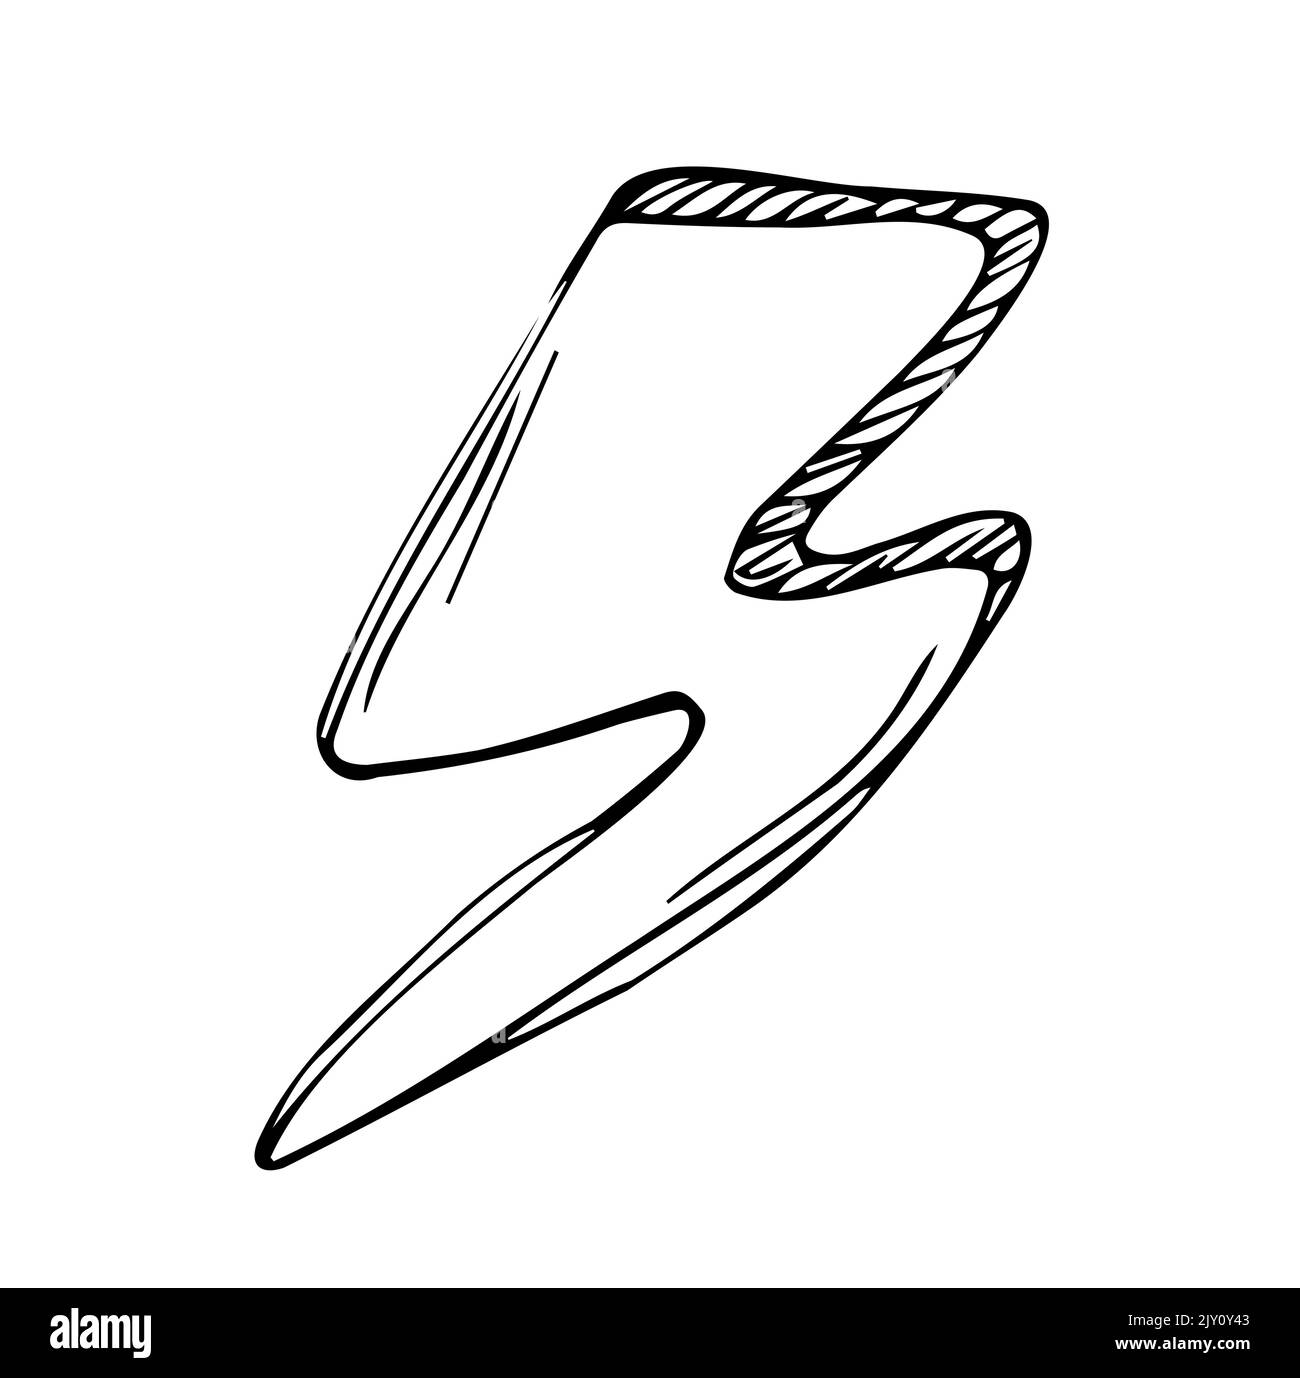 hand drawn electric lightning bolt symbol sketch illustration. thunder symbol doodle icon. design element isolated on white background. vector illustr Stock Vector